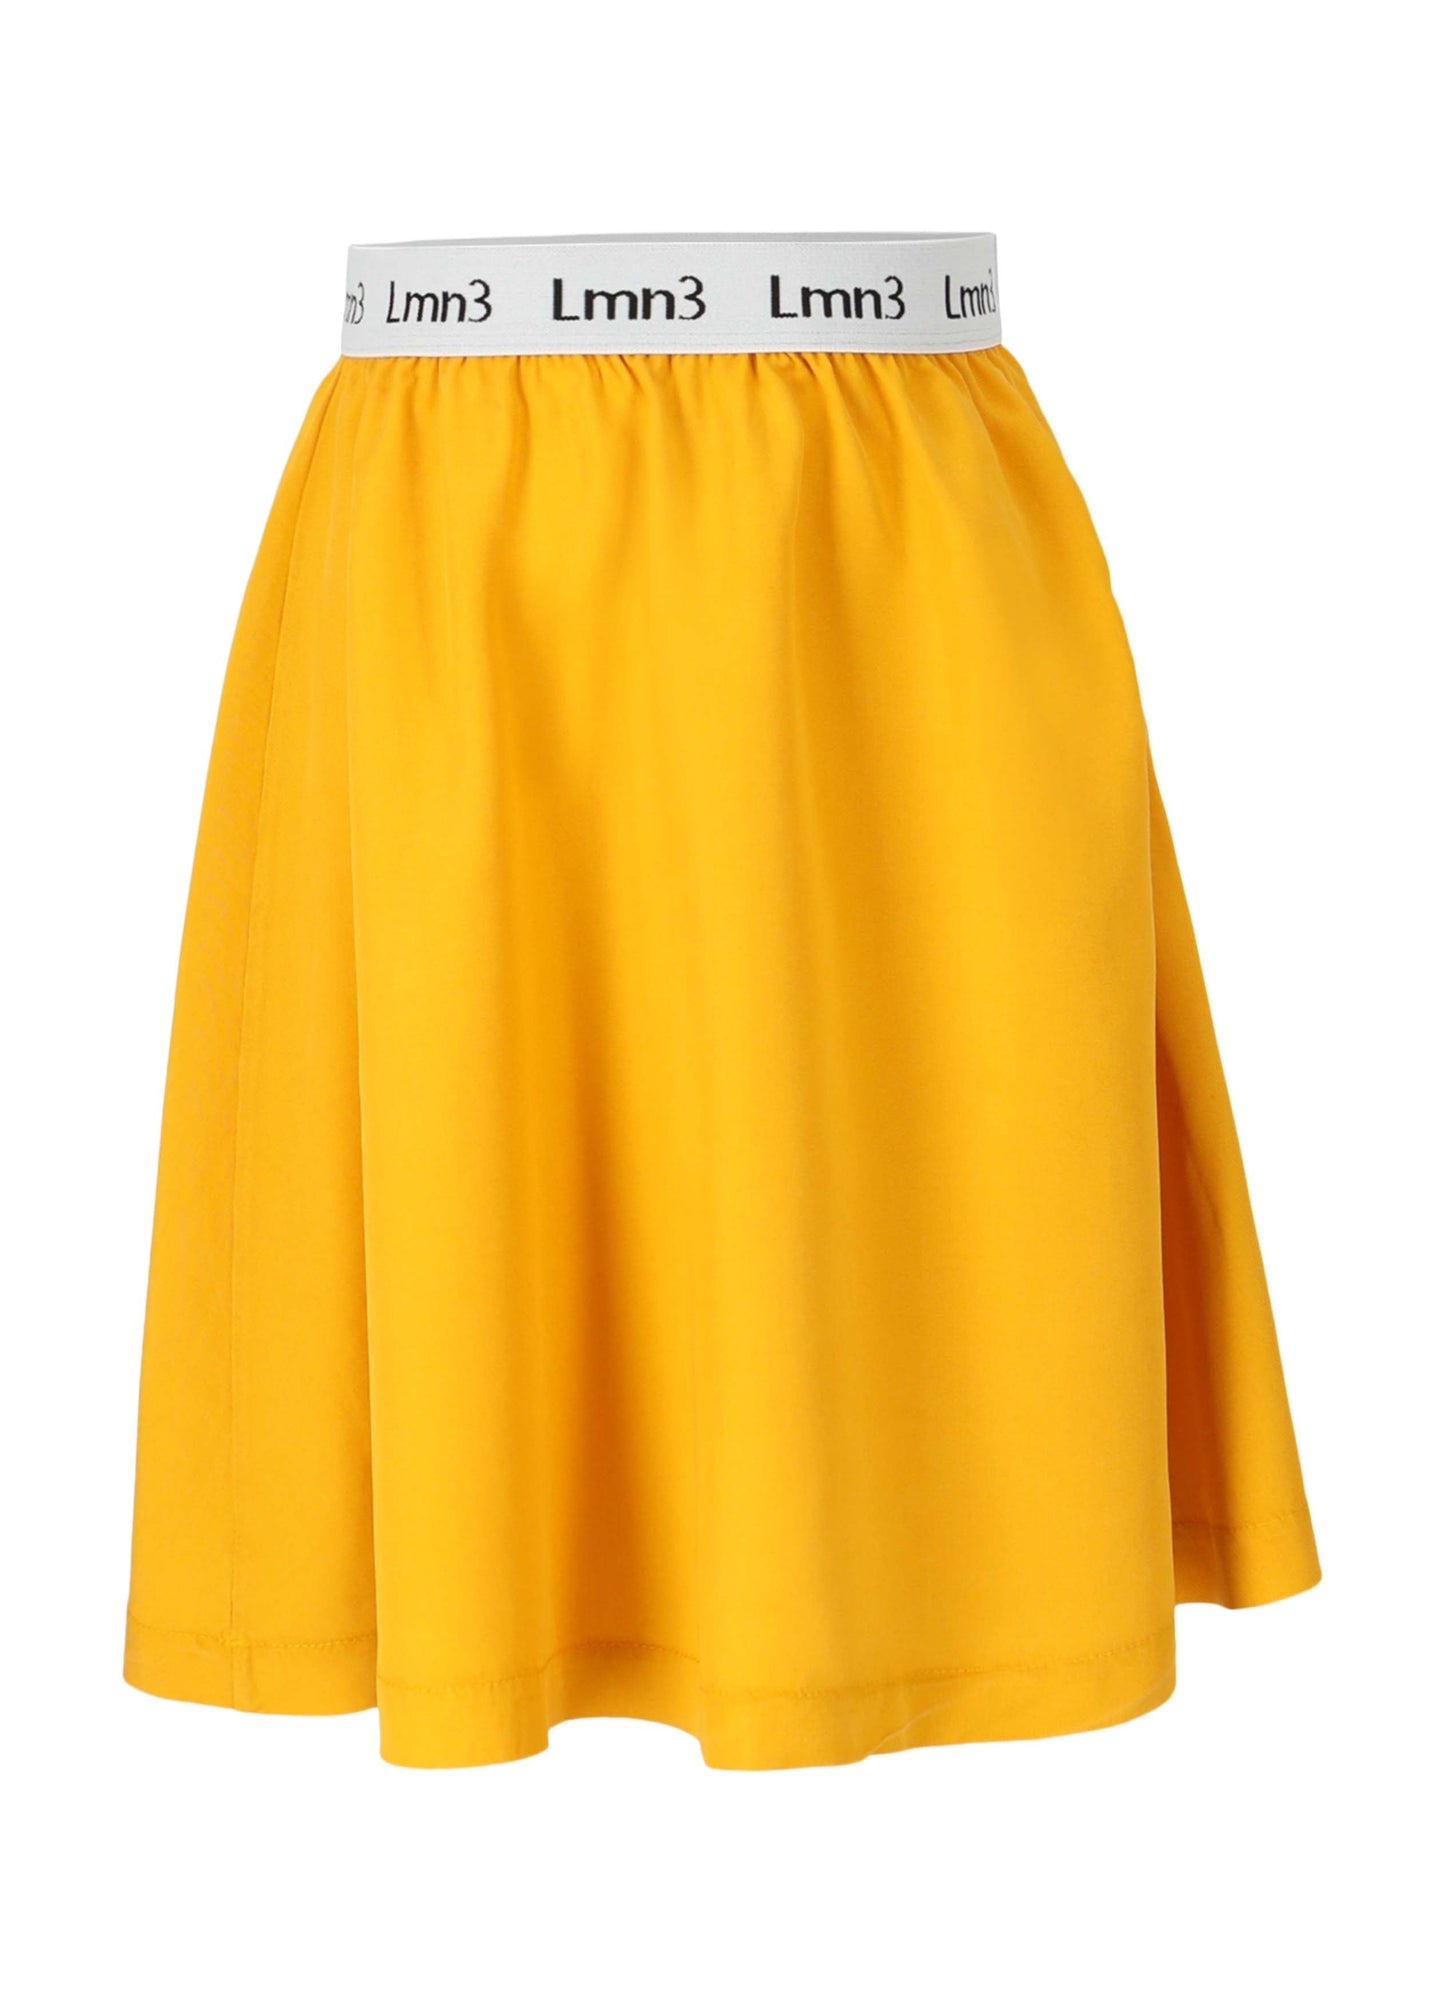 Skirt No. 8 - Mineral Yellow Skirts LMN3 